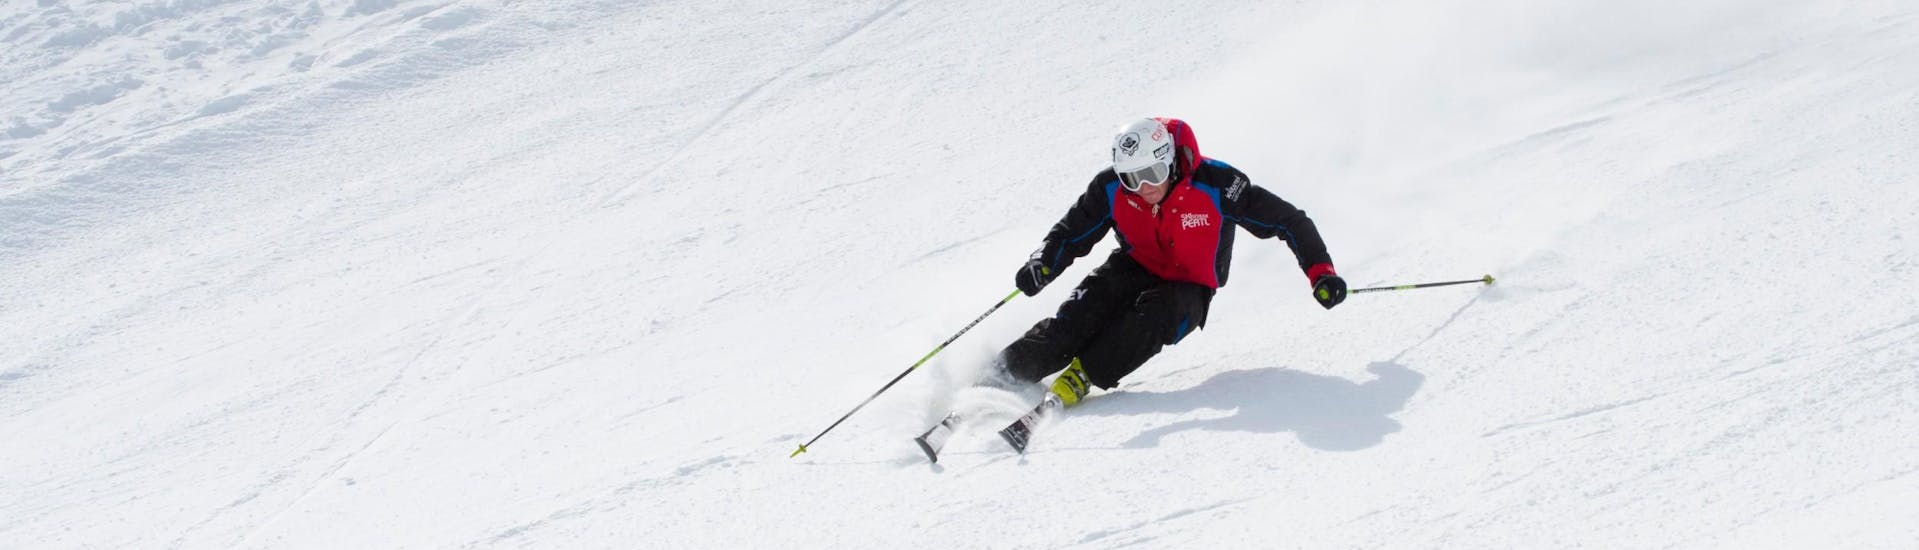 Lezioni di sci per adulti per tutti i livelli.